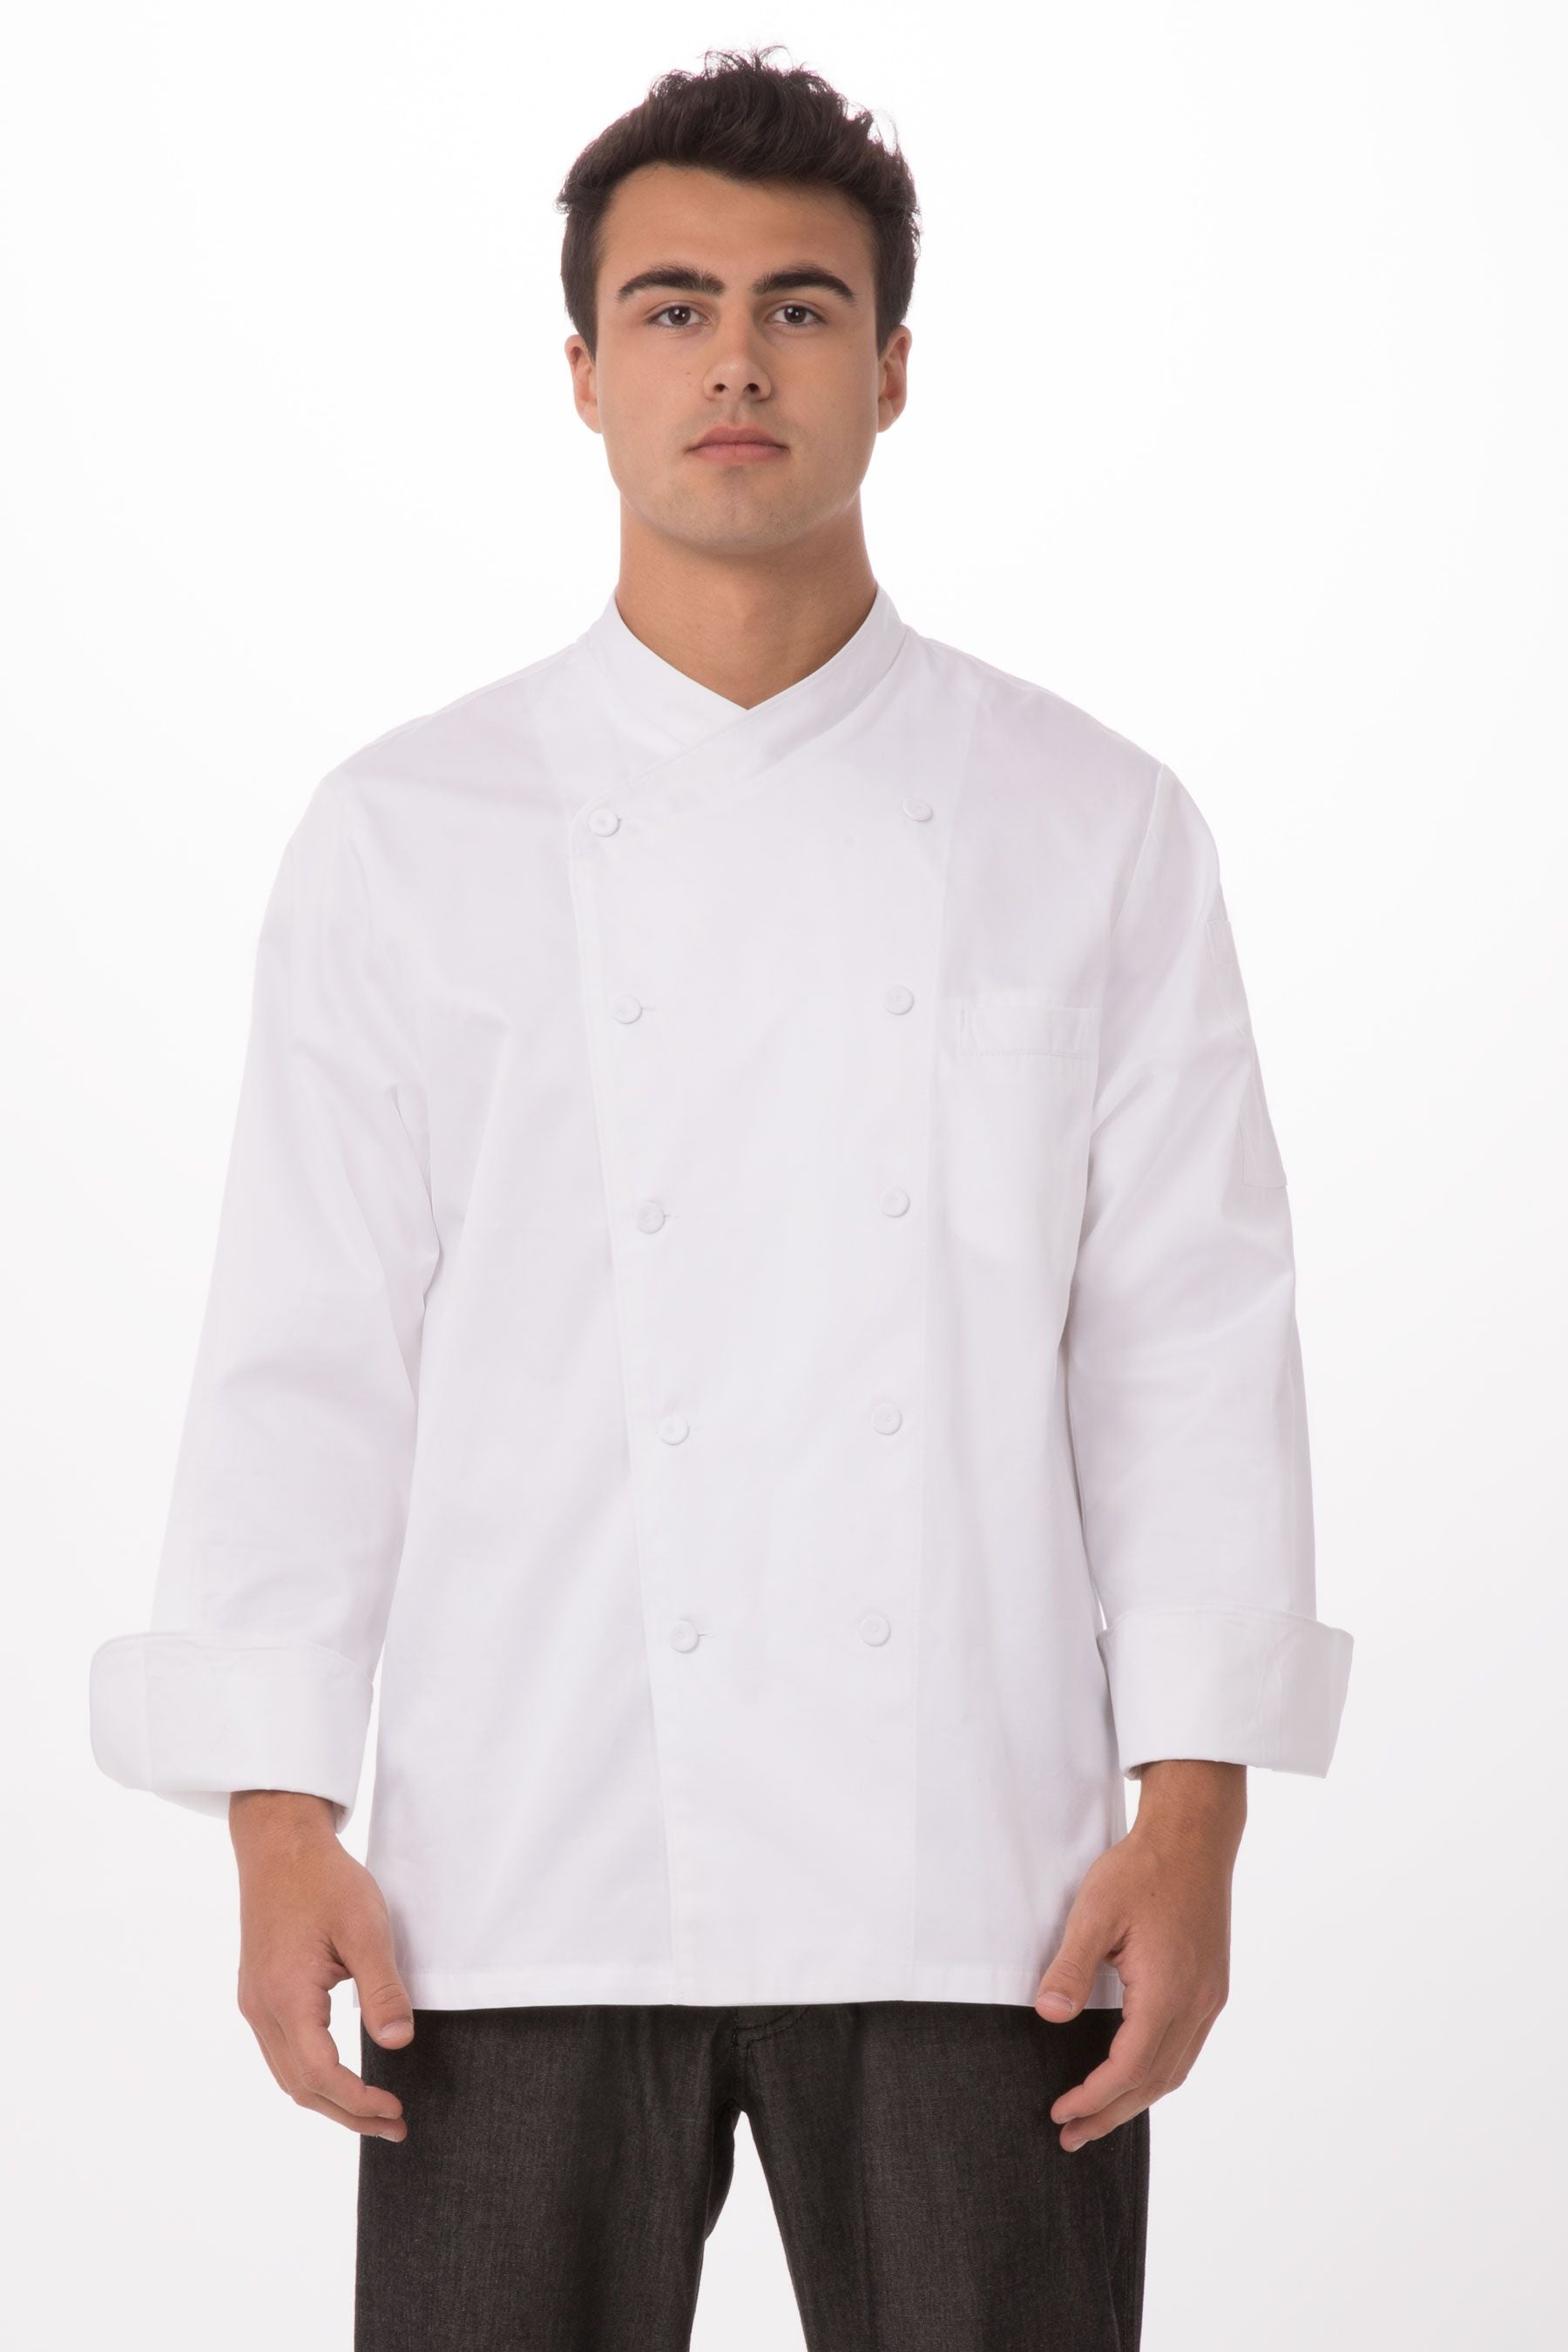 Oslo Premium Cotton Chef Coat